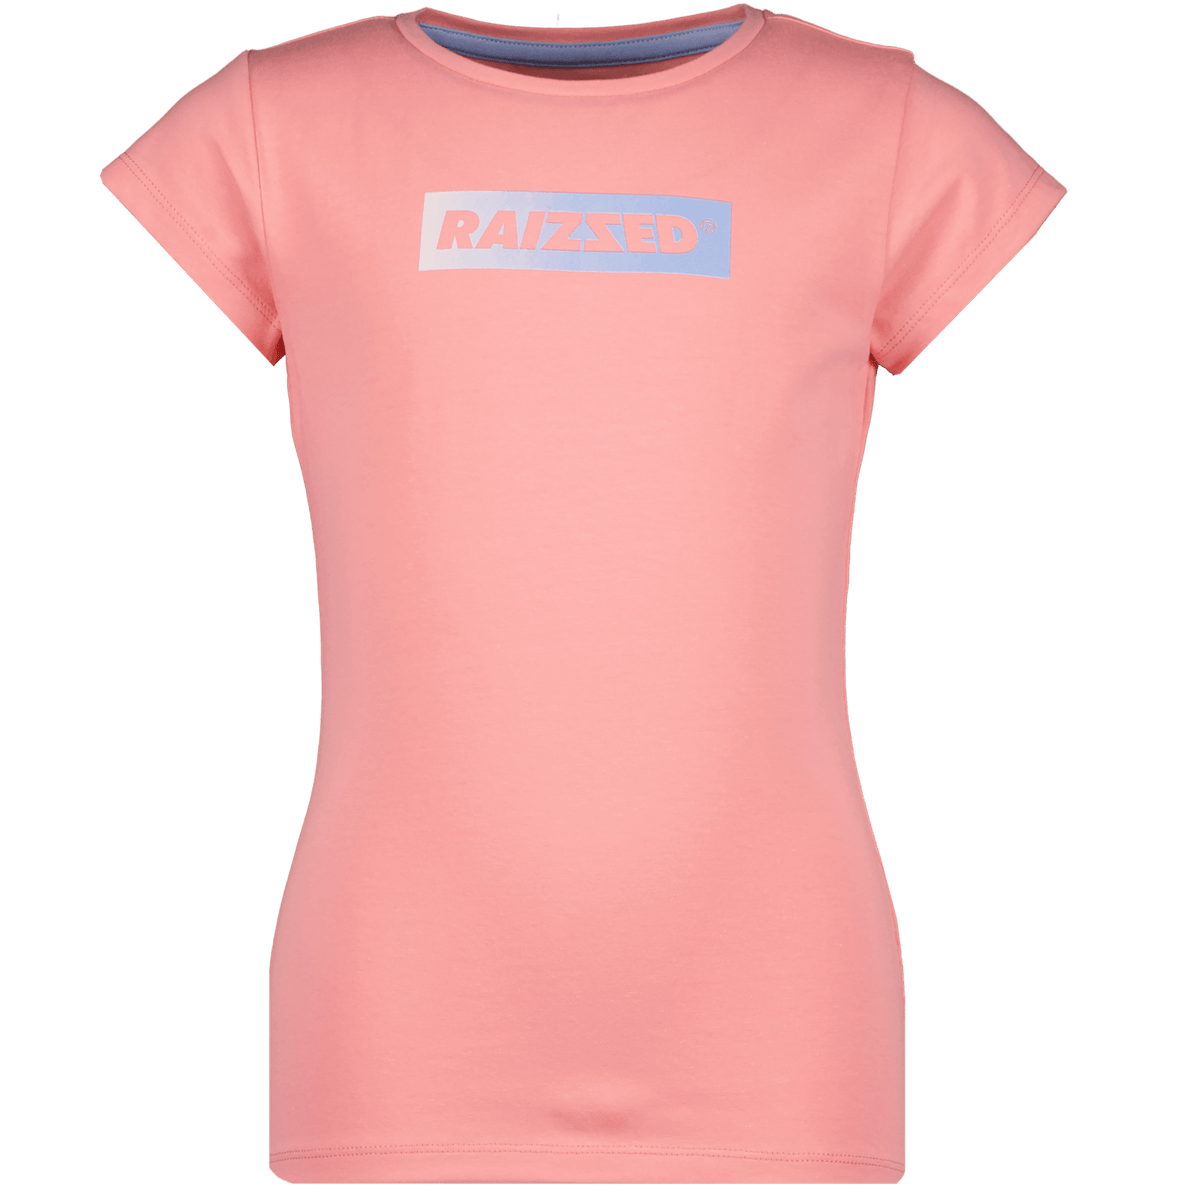 Mädchen T-Shirt Florence Blush Coral